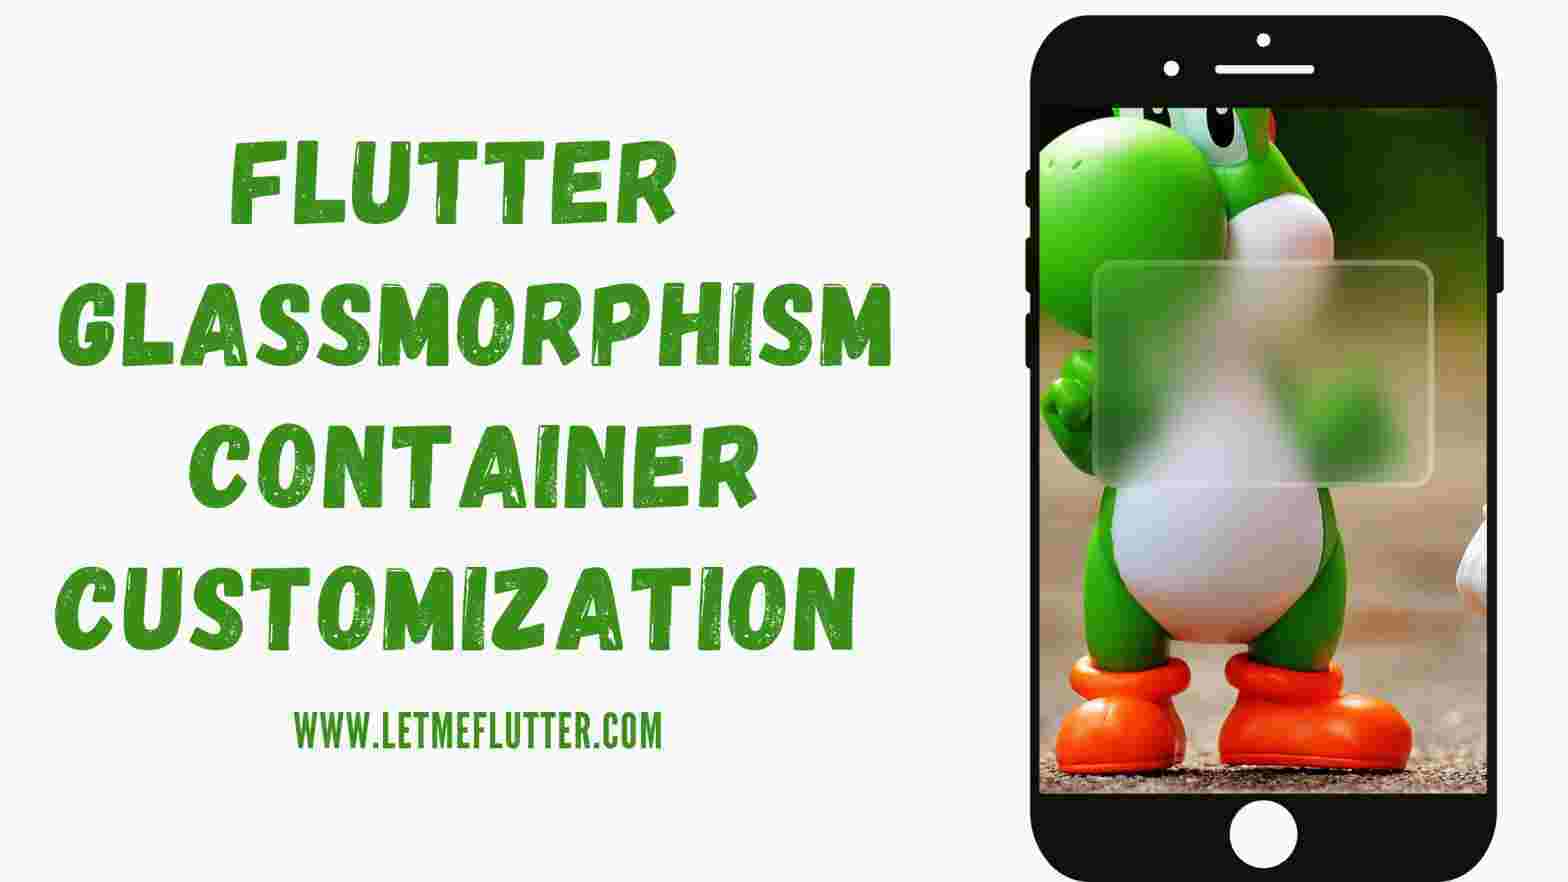 Flutter glassmorphism container